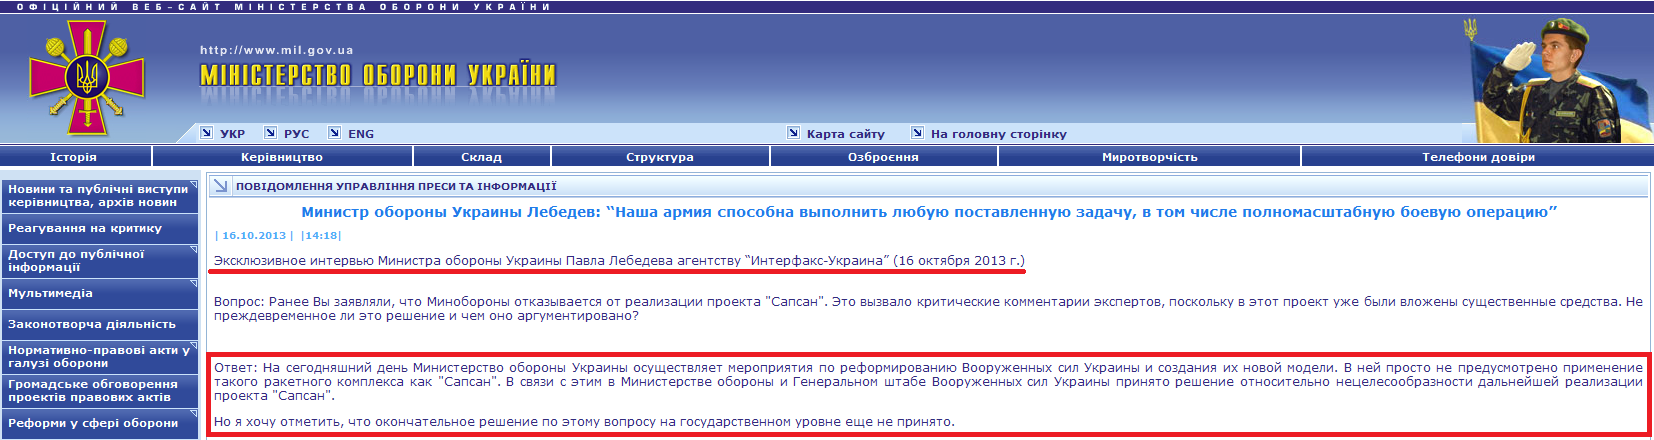 http://www.mil.gov.ua/index.php?lang=ua&part=news&sub=read&id=31059